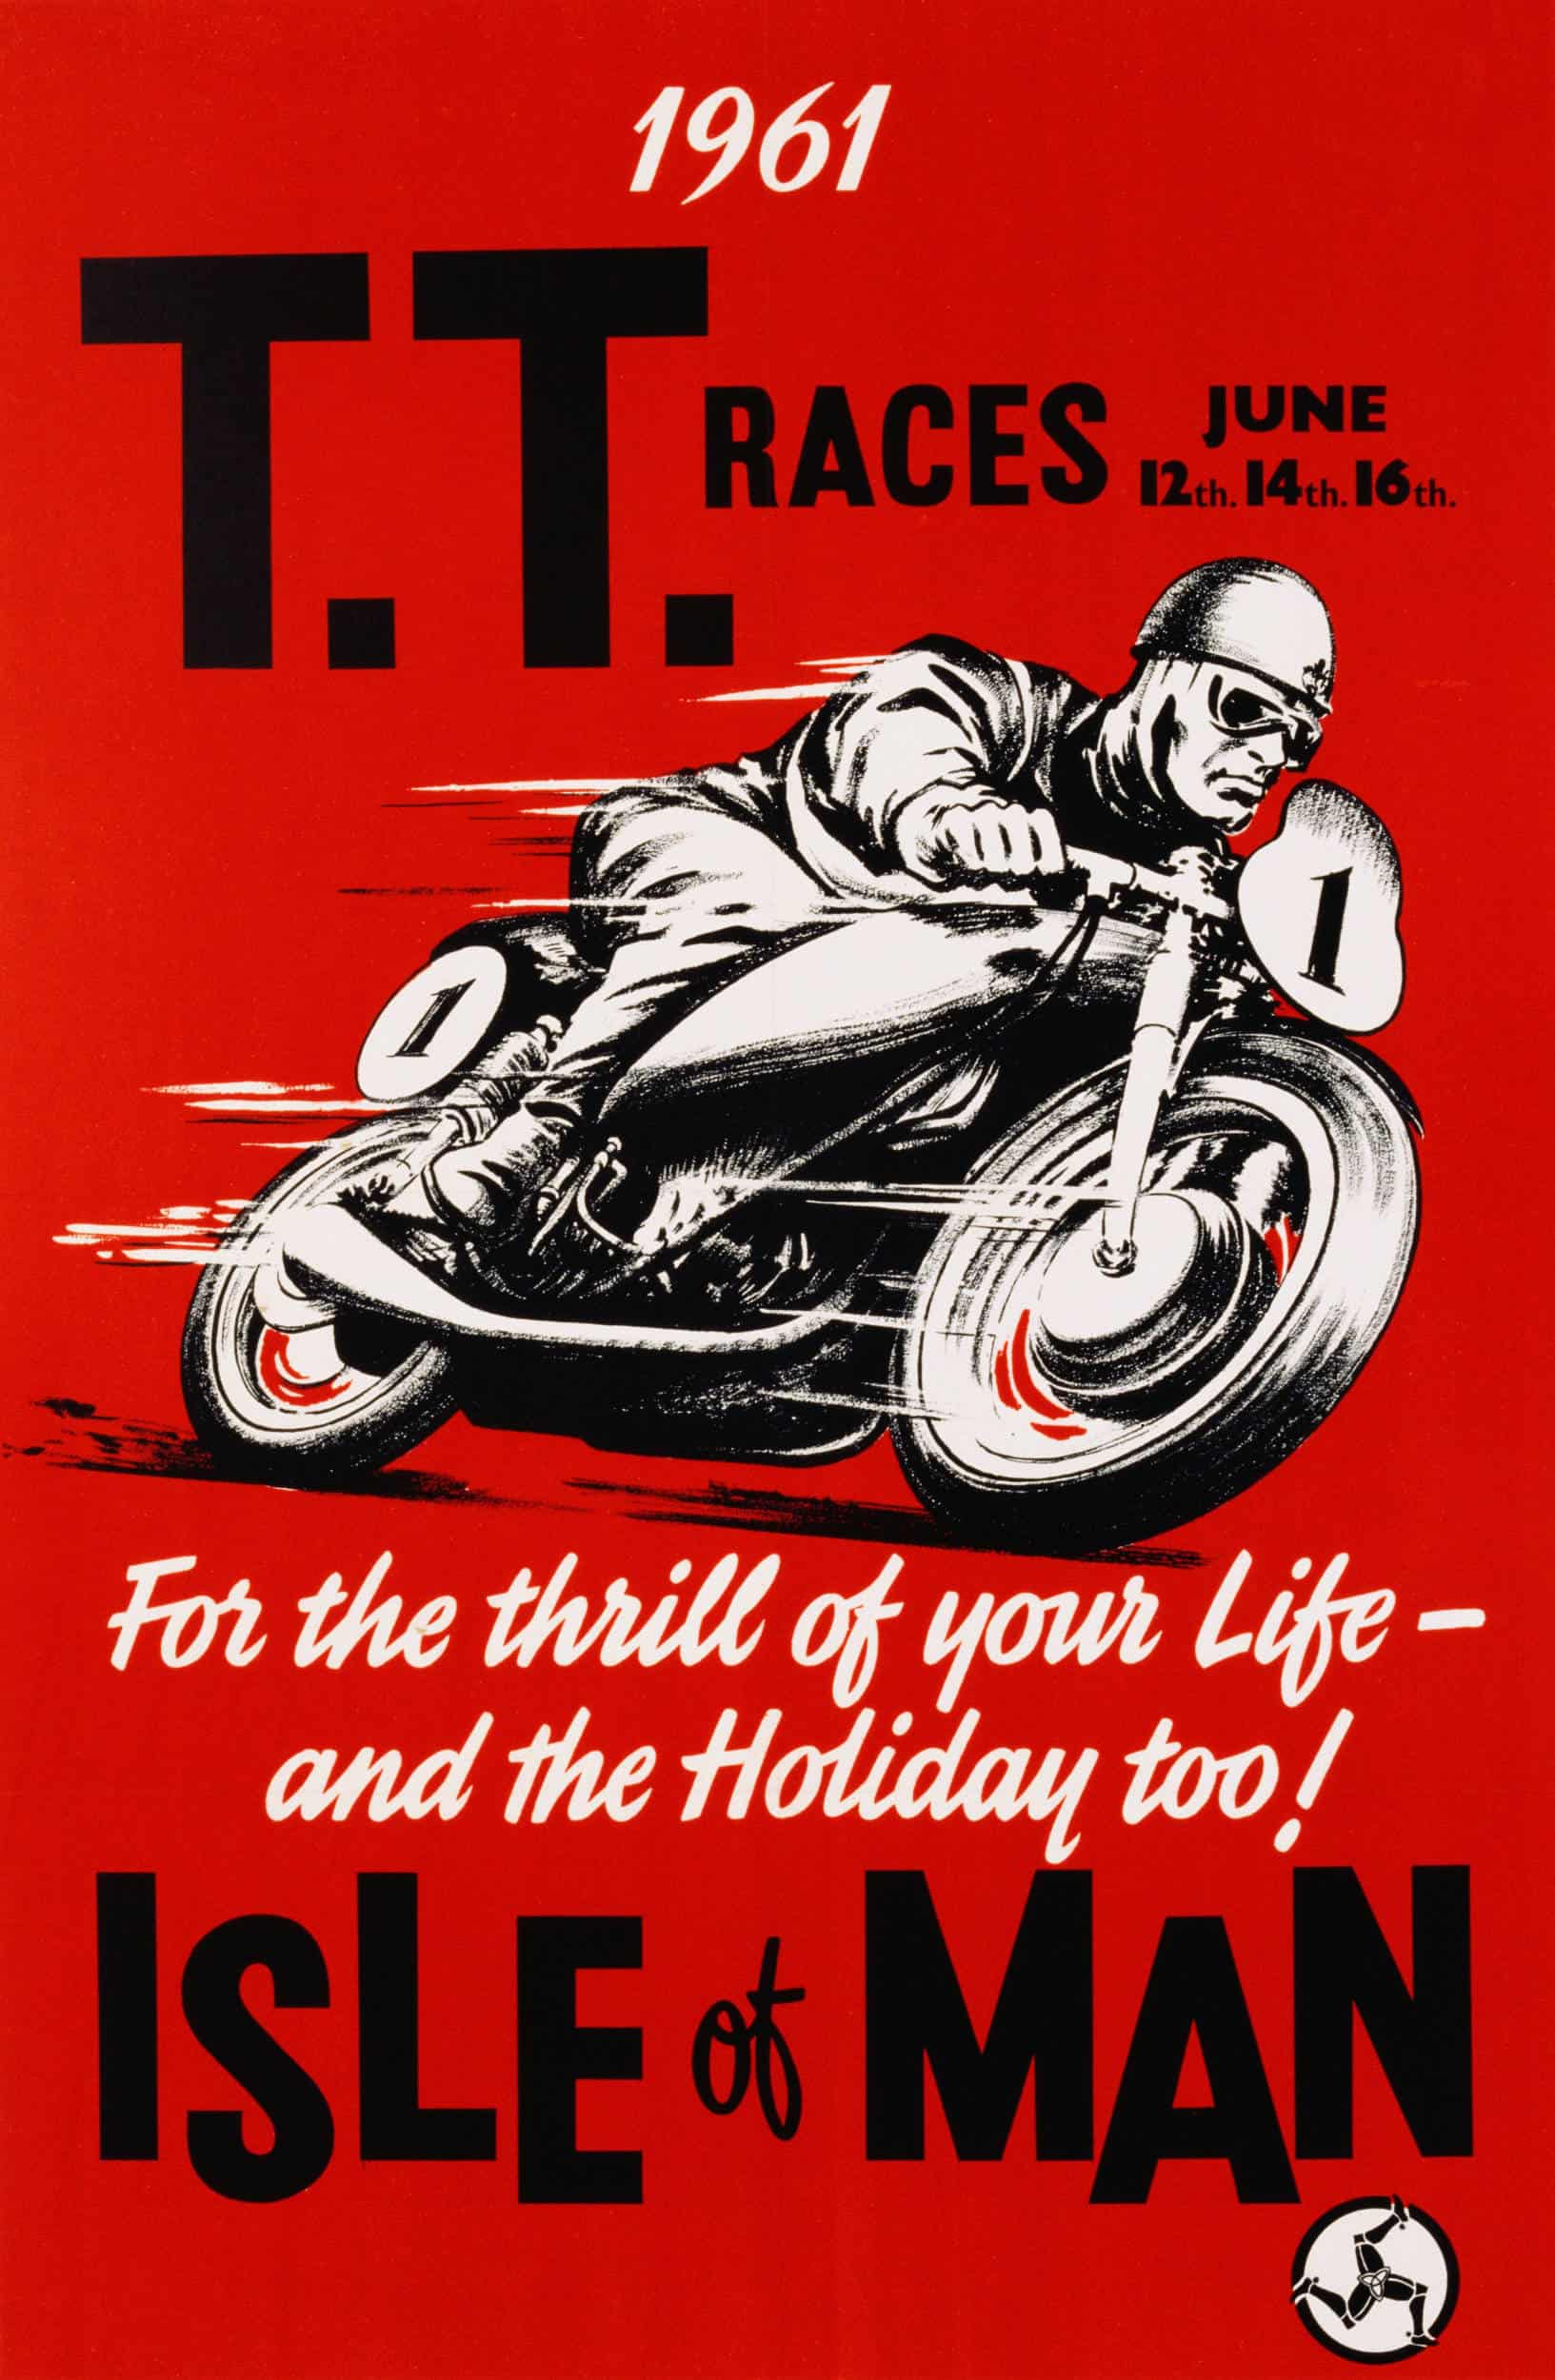 TT Isle of Man vintage advertising